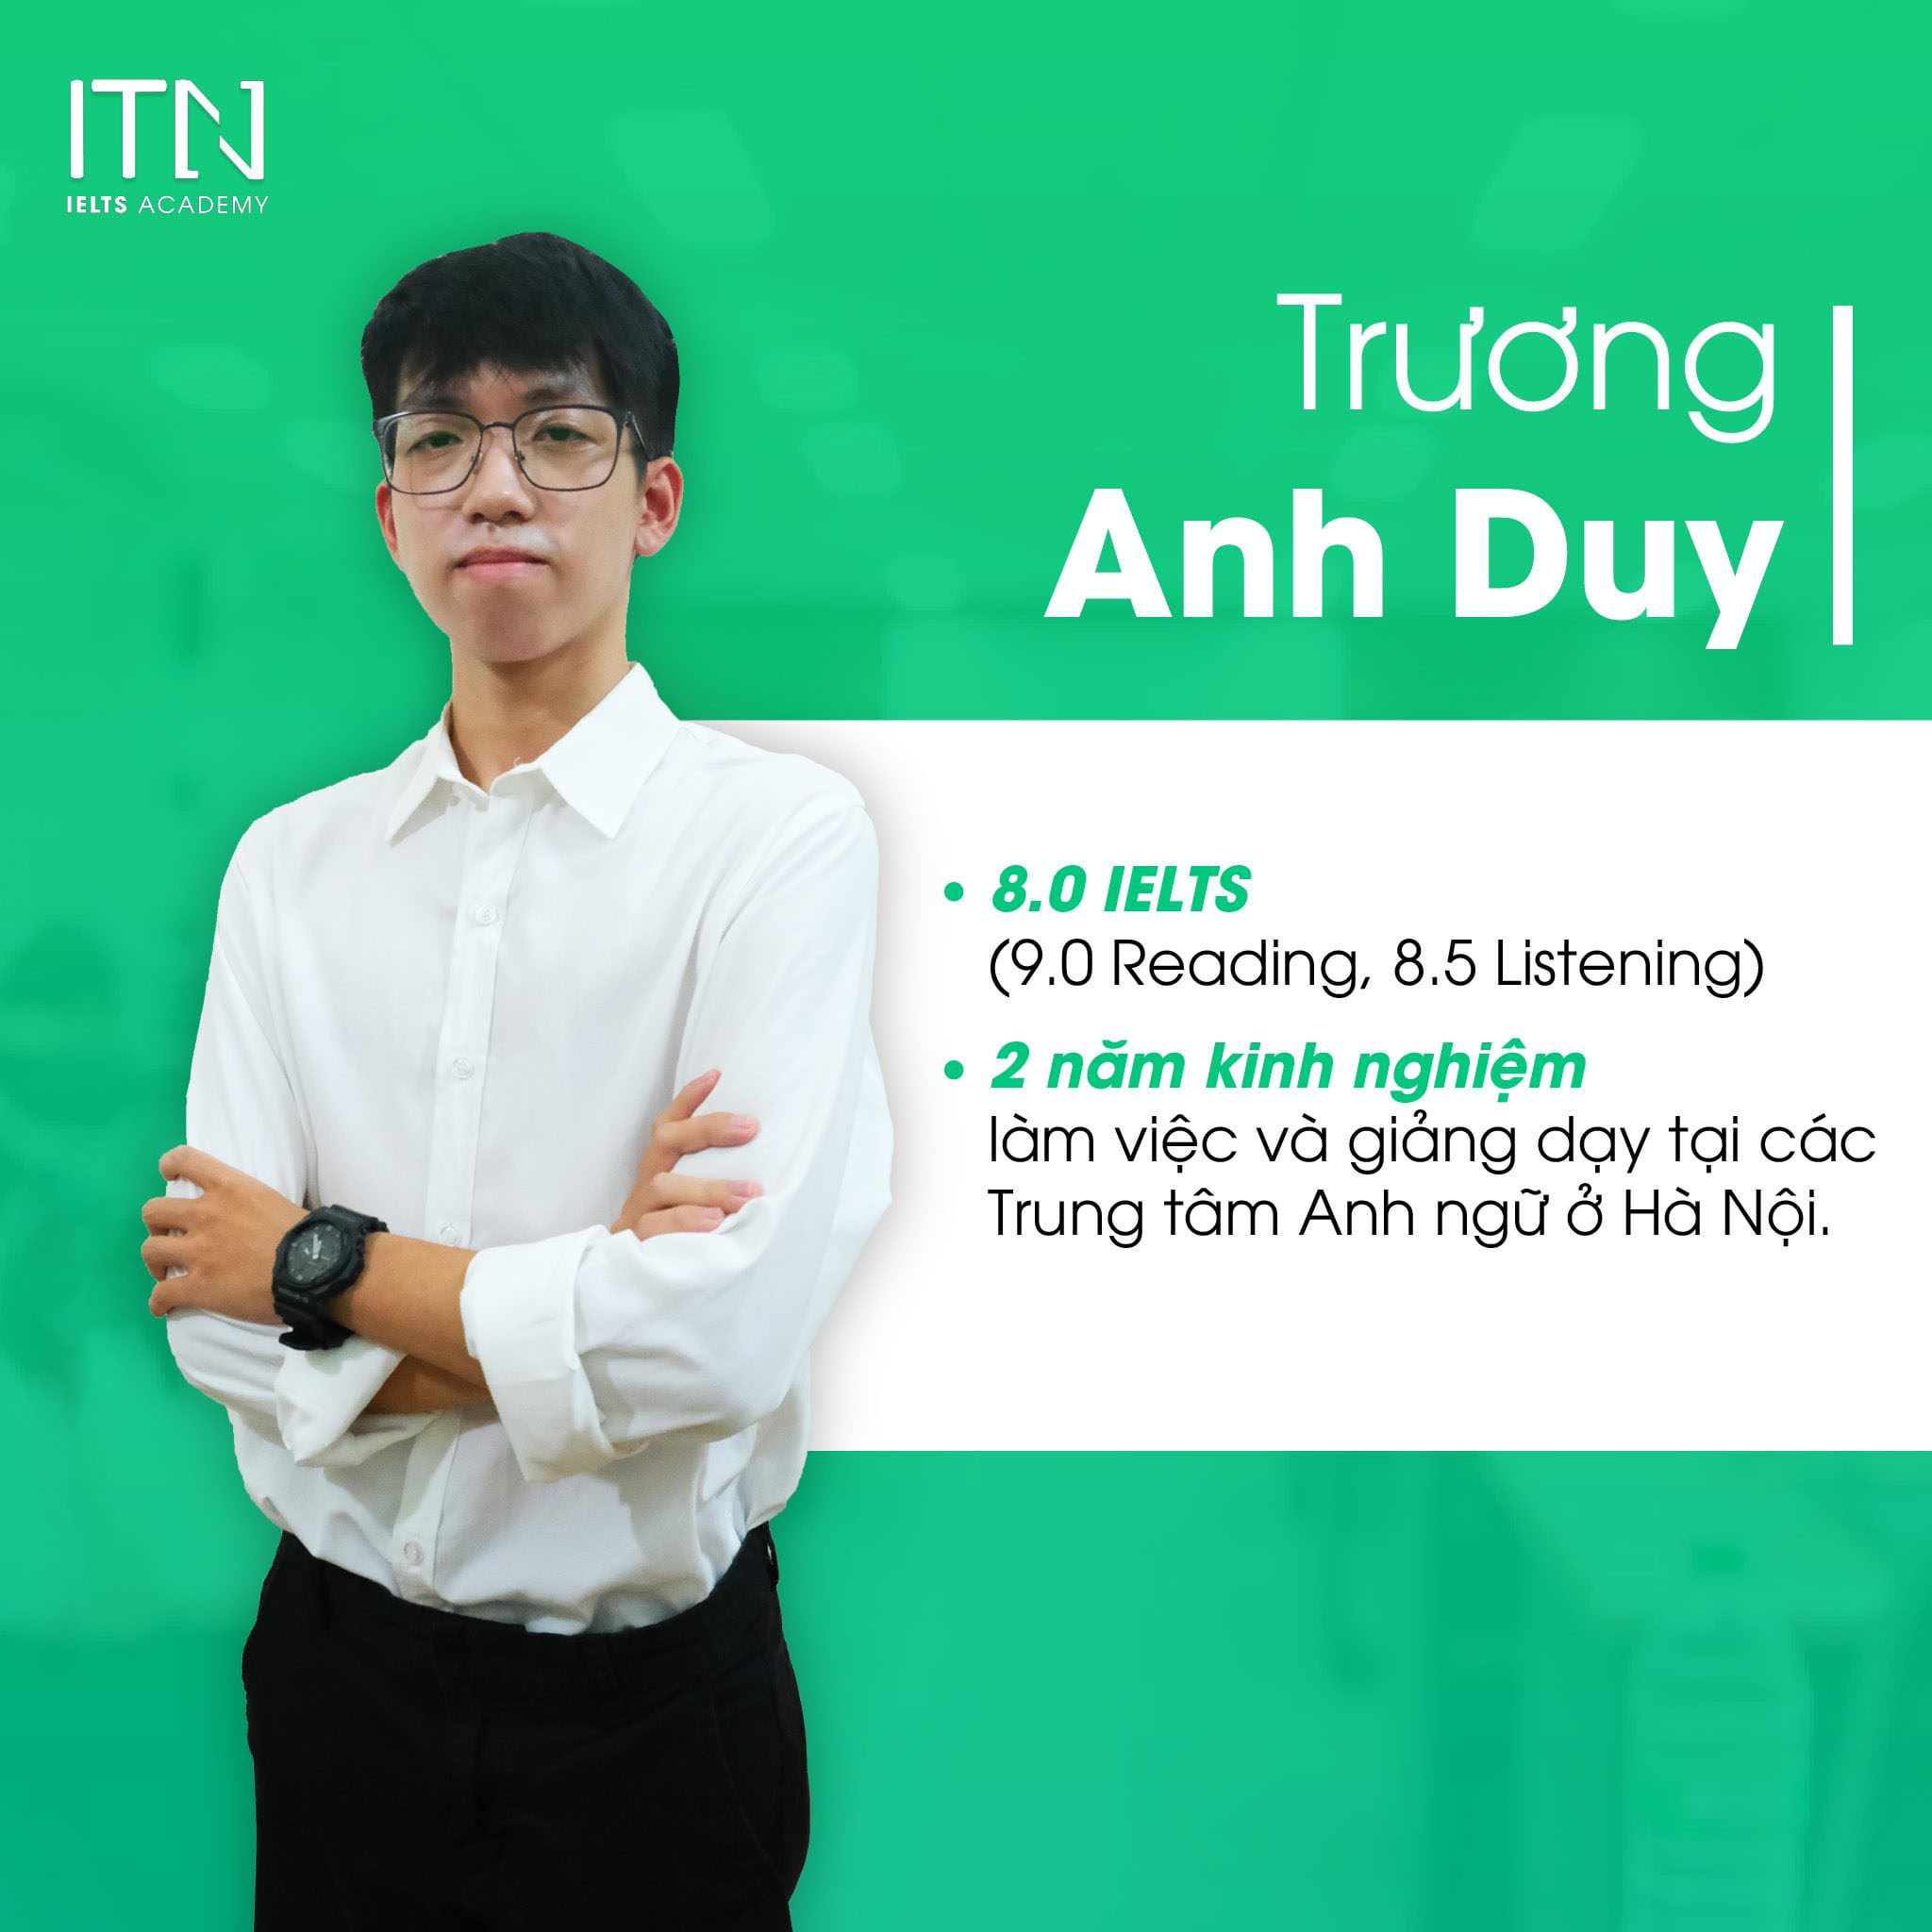 Mr. Trương Anh Duy - 8.0 IELTS Overall